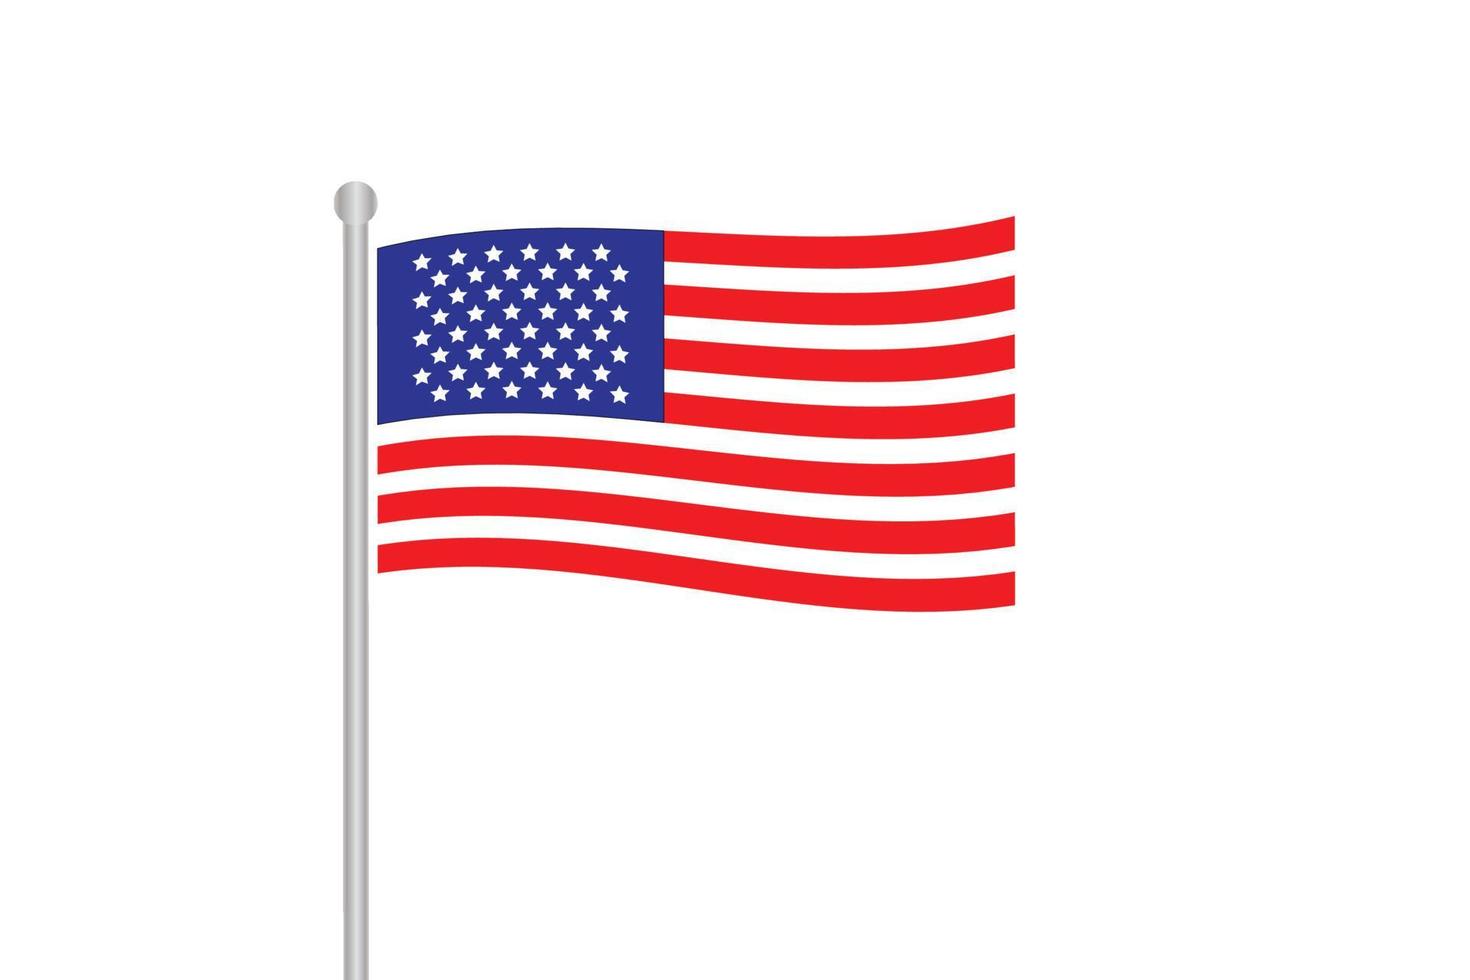 mooi amerikaans vlagontwerp als achtergrond vector